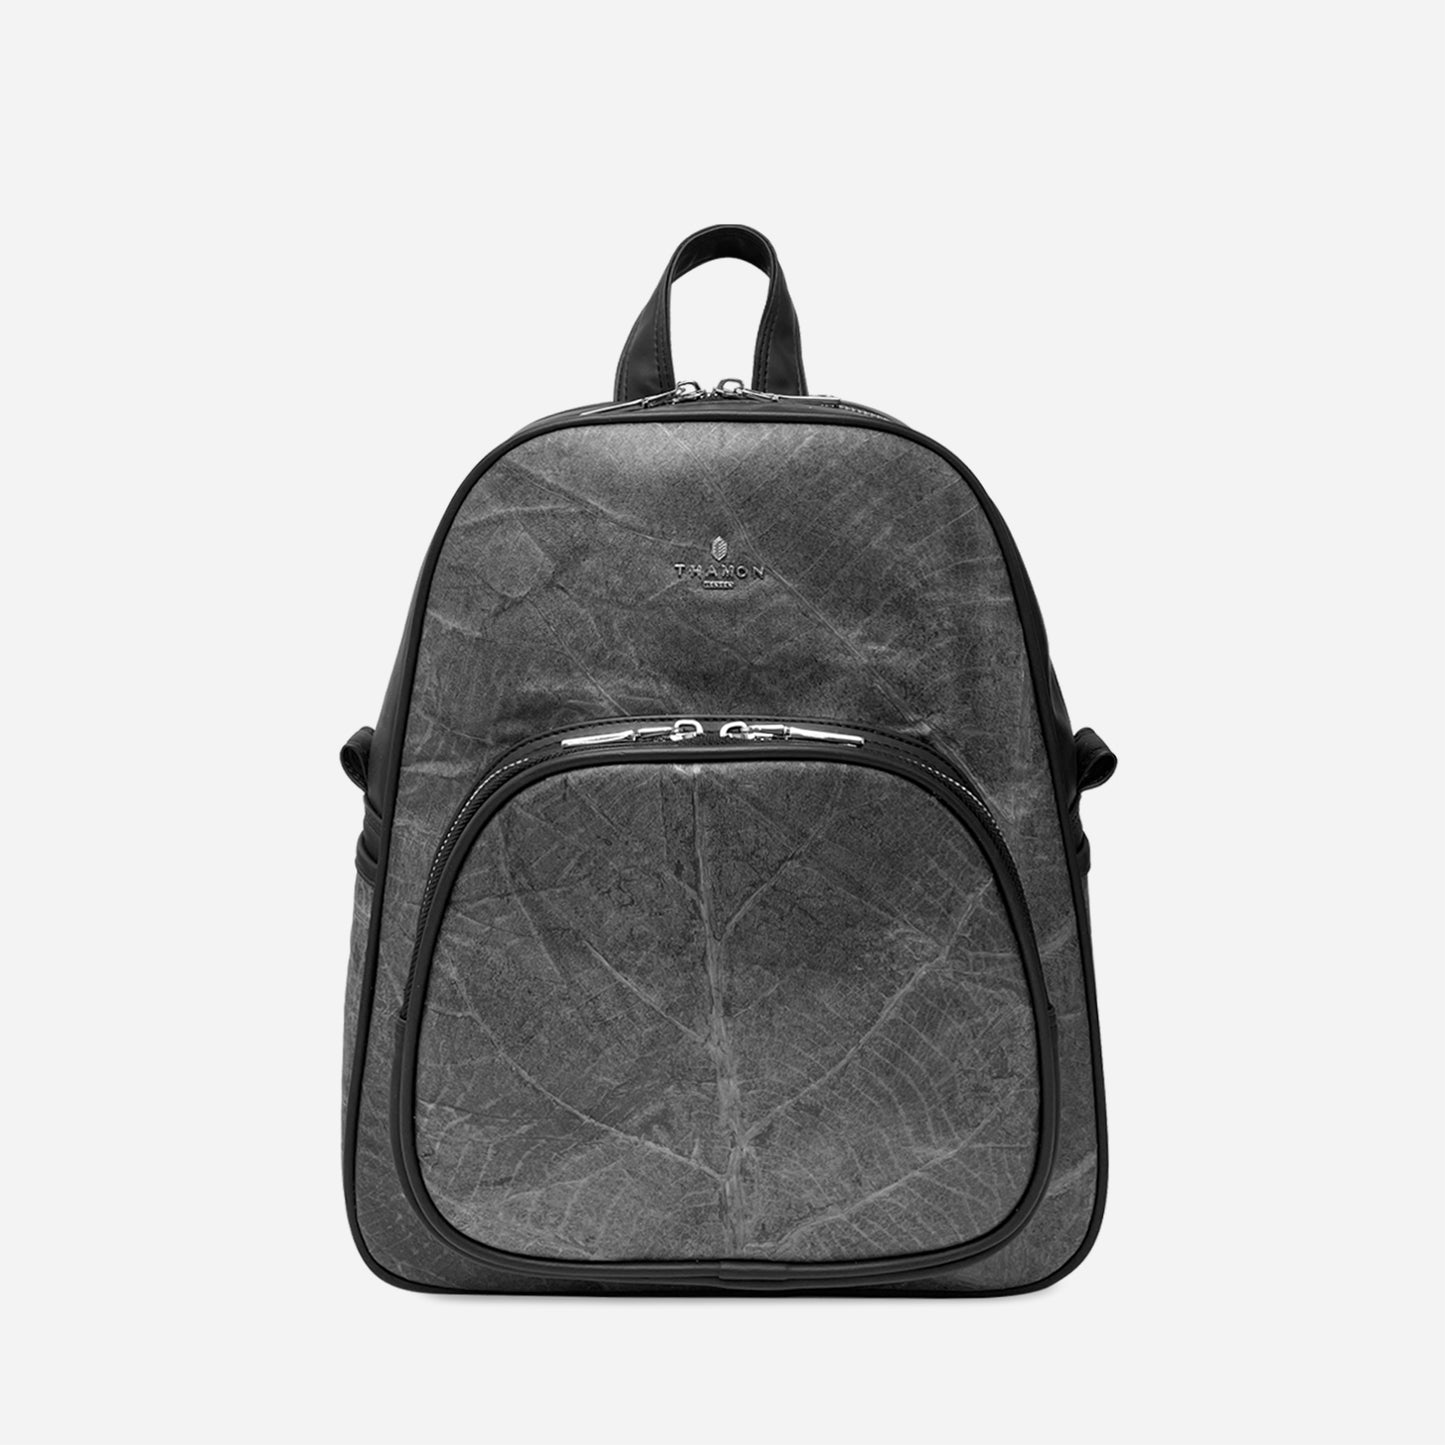 Vegan Leaf Leather Backpack Thamon Black